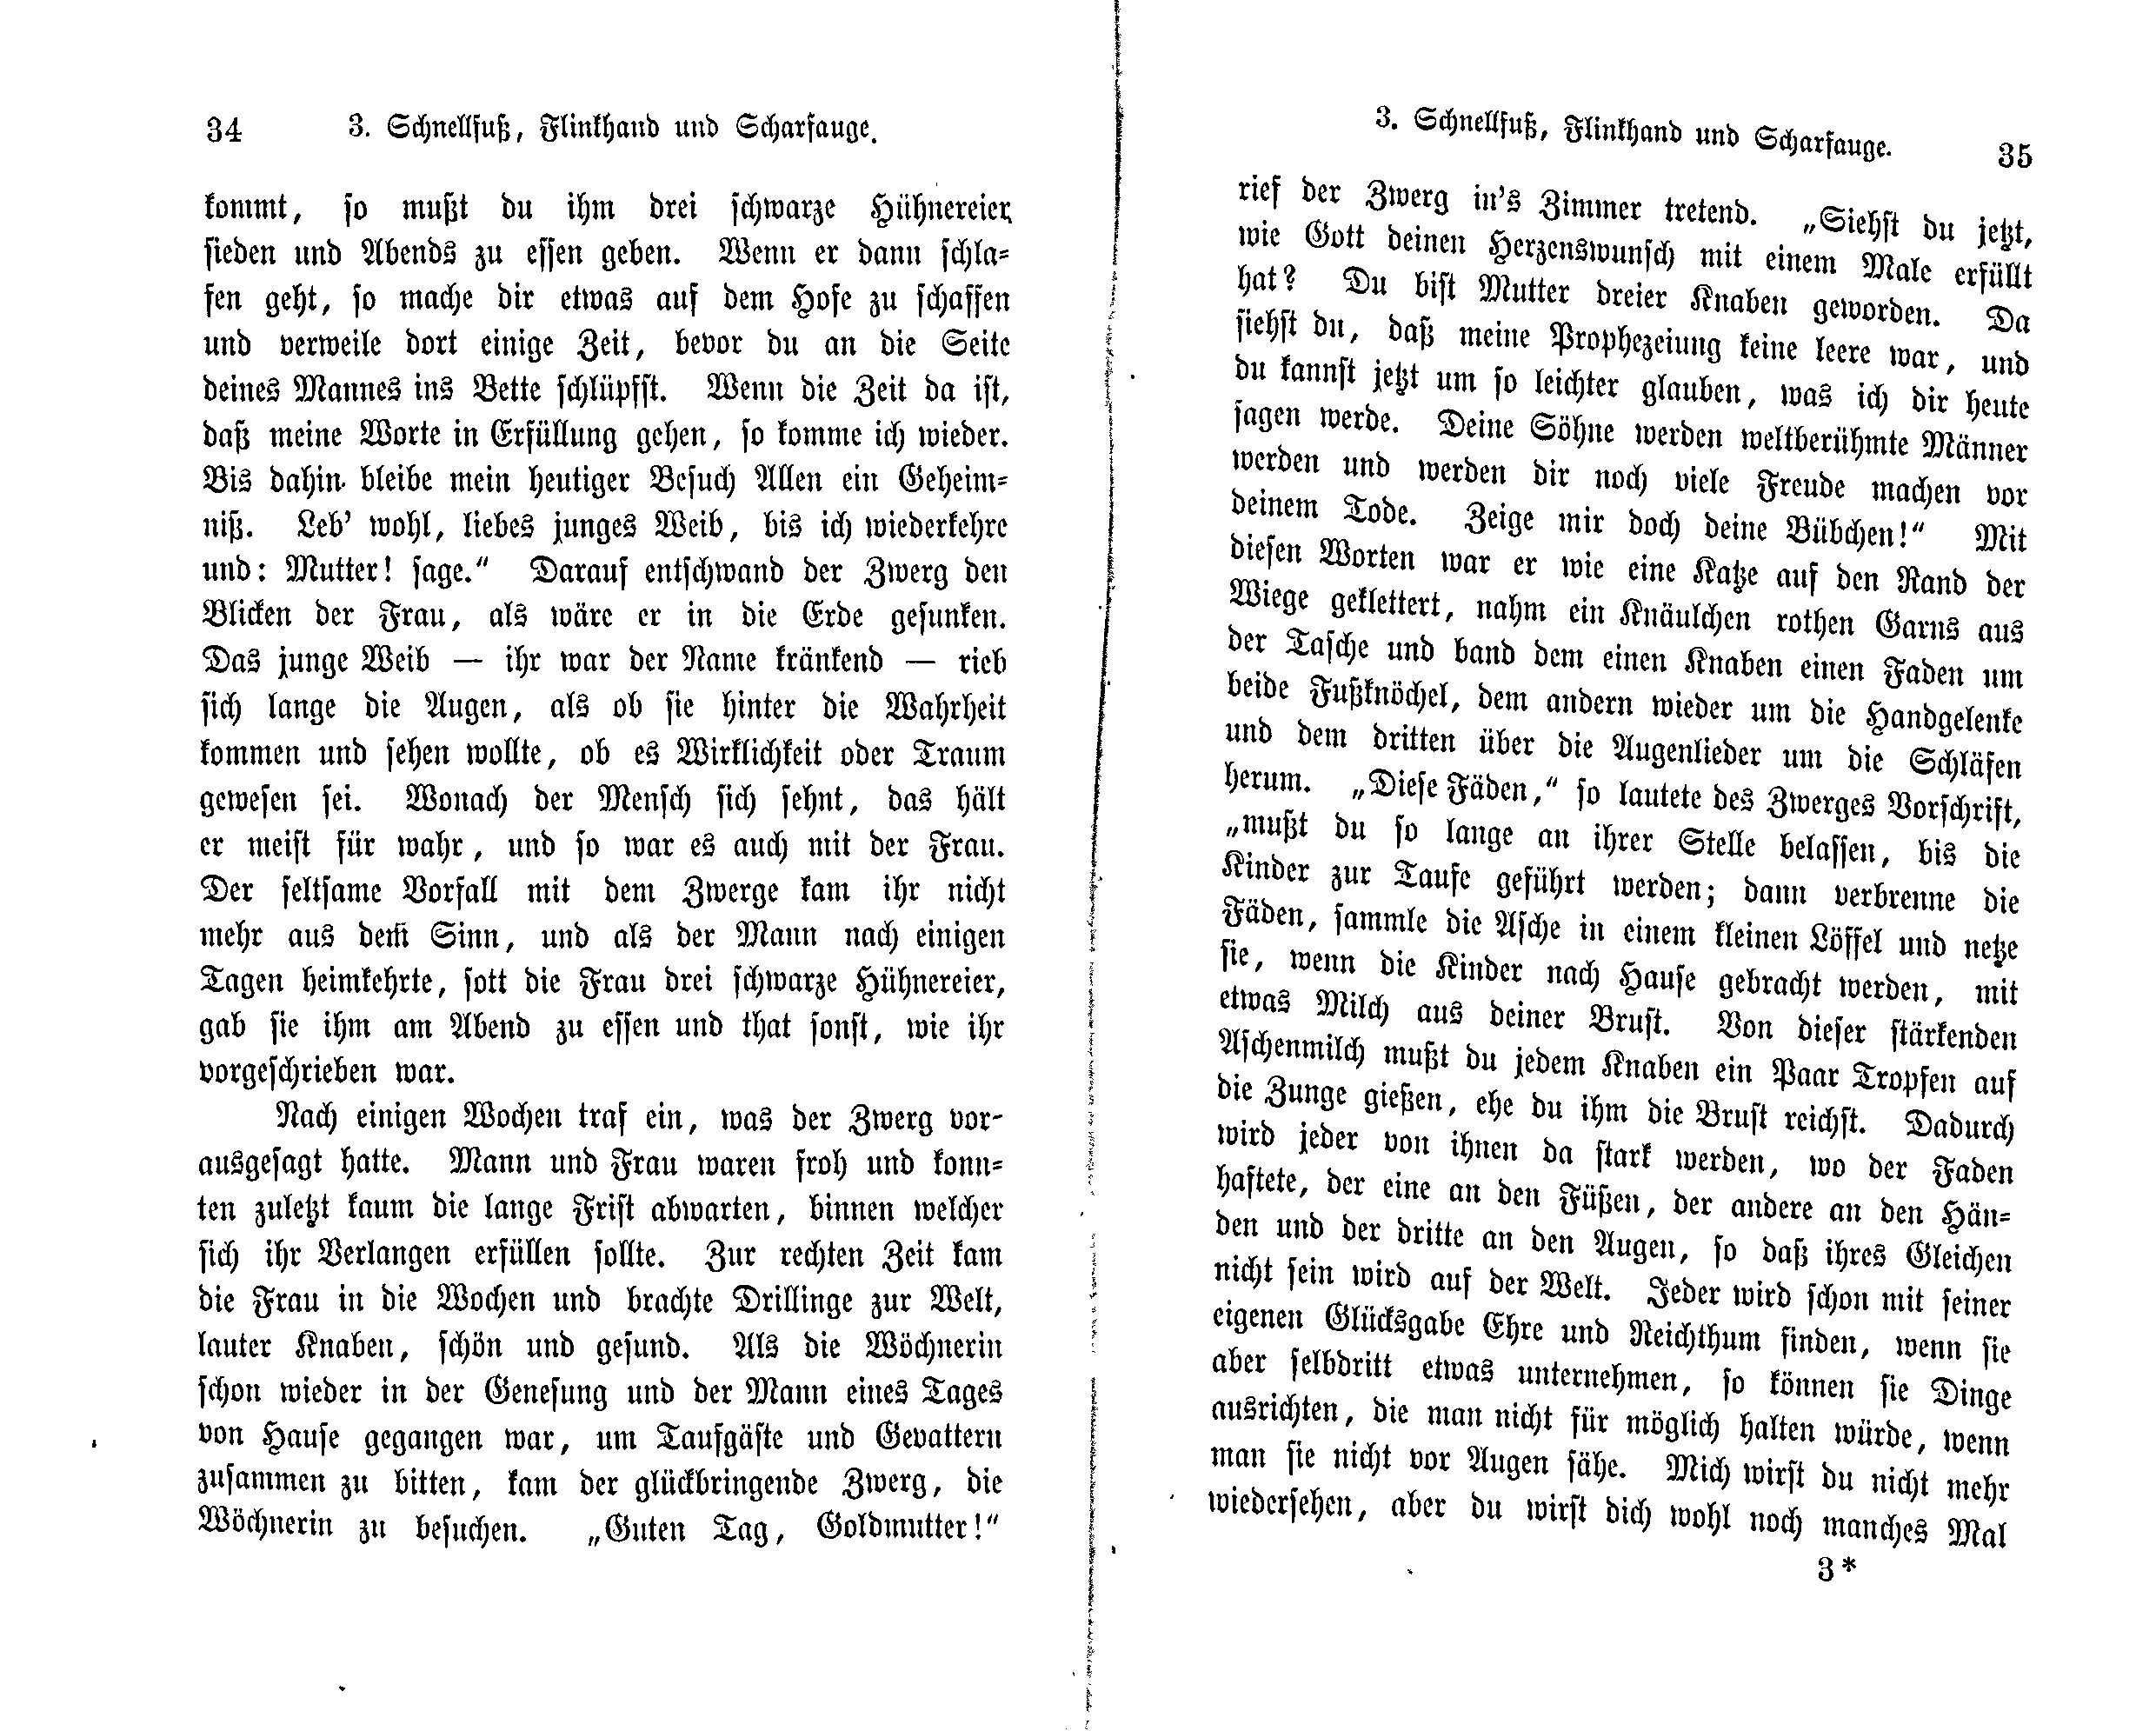 Estnische Märchen [1] (1869) | 22. (34-35) Main body of text